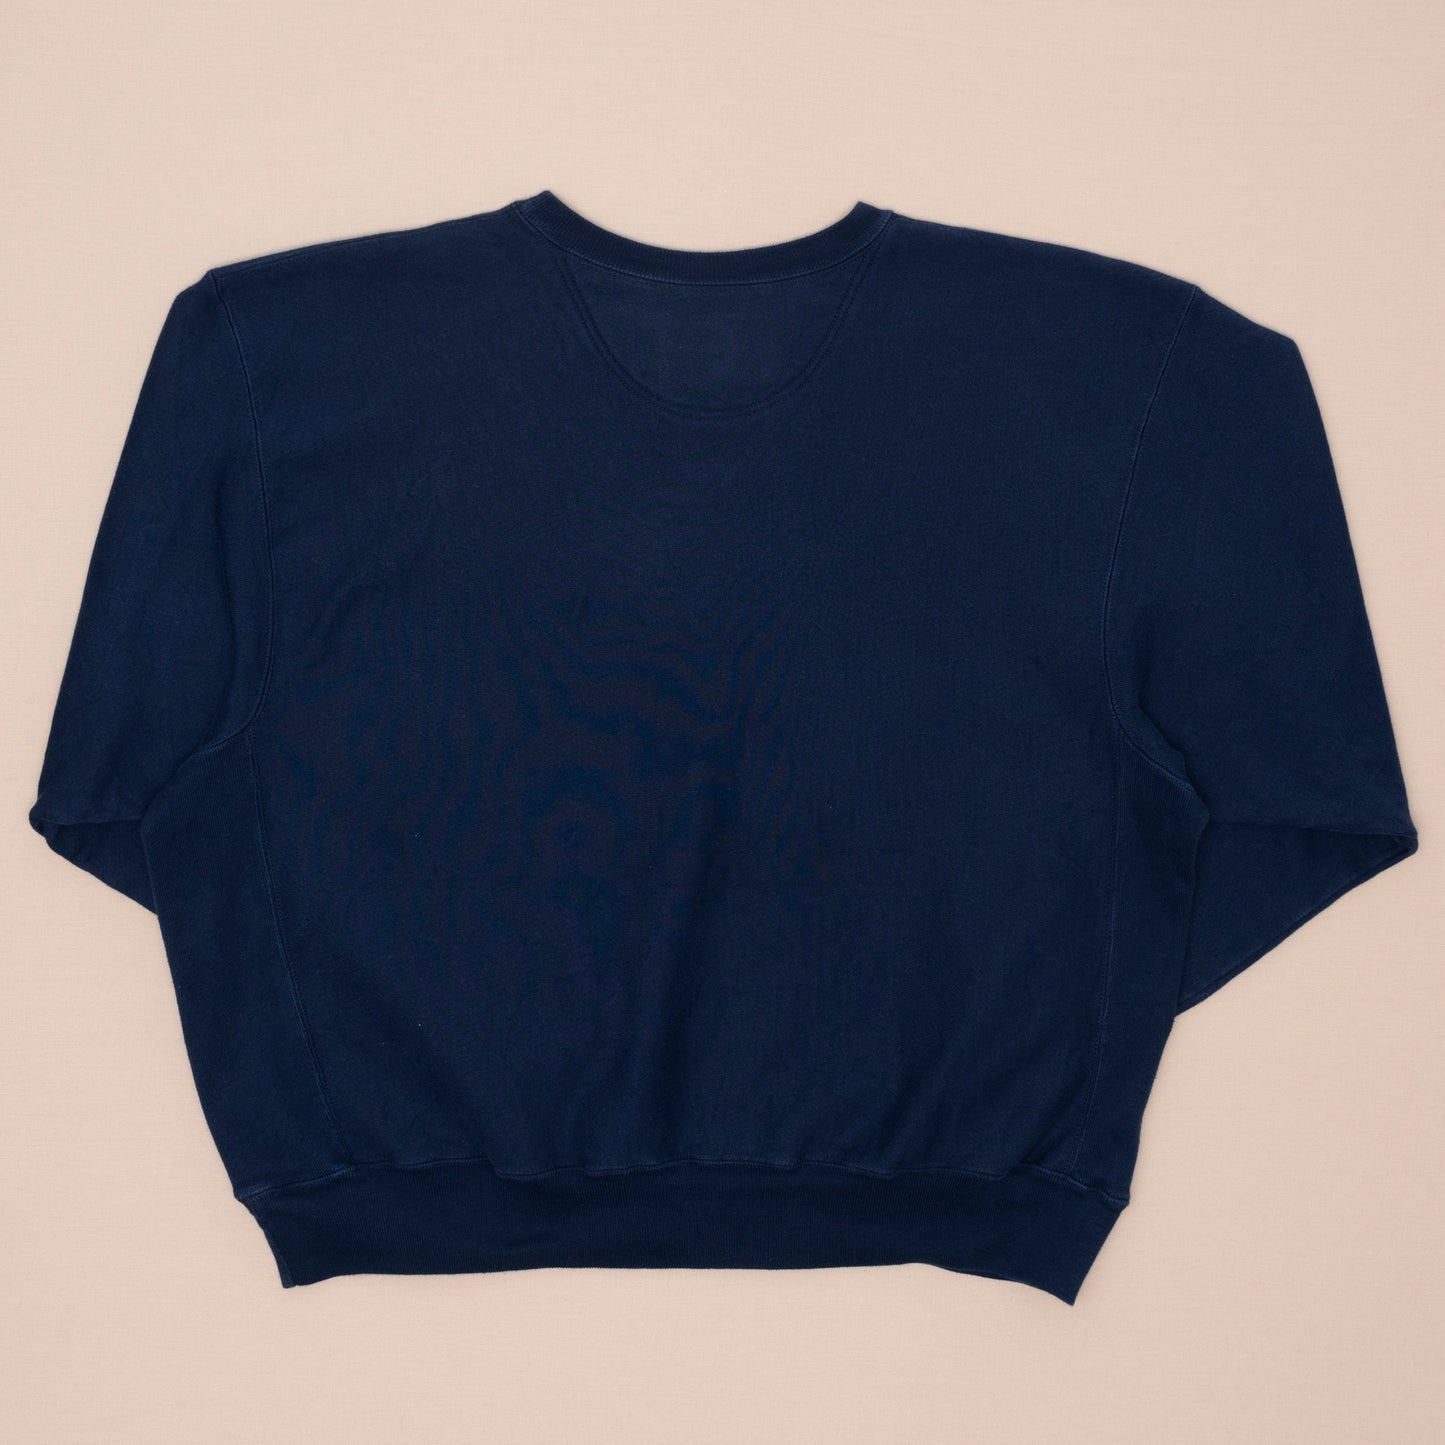 Northeast Reverse Weave Sweater, XL